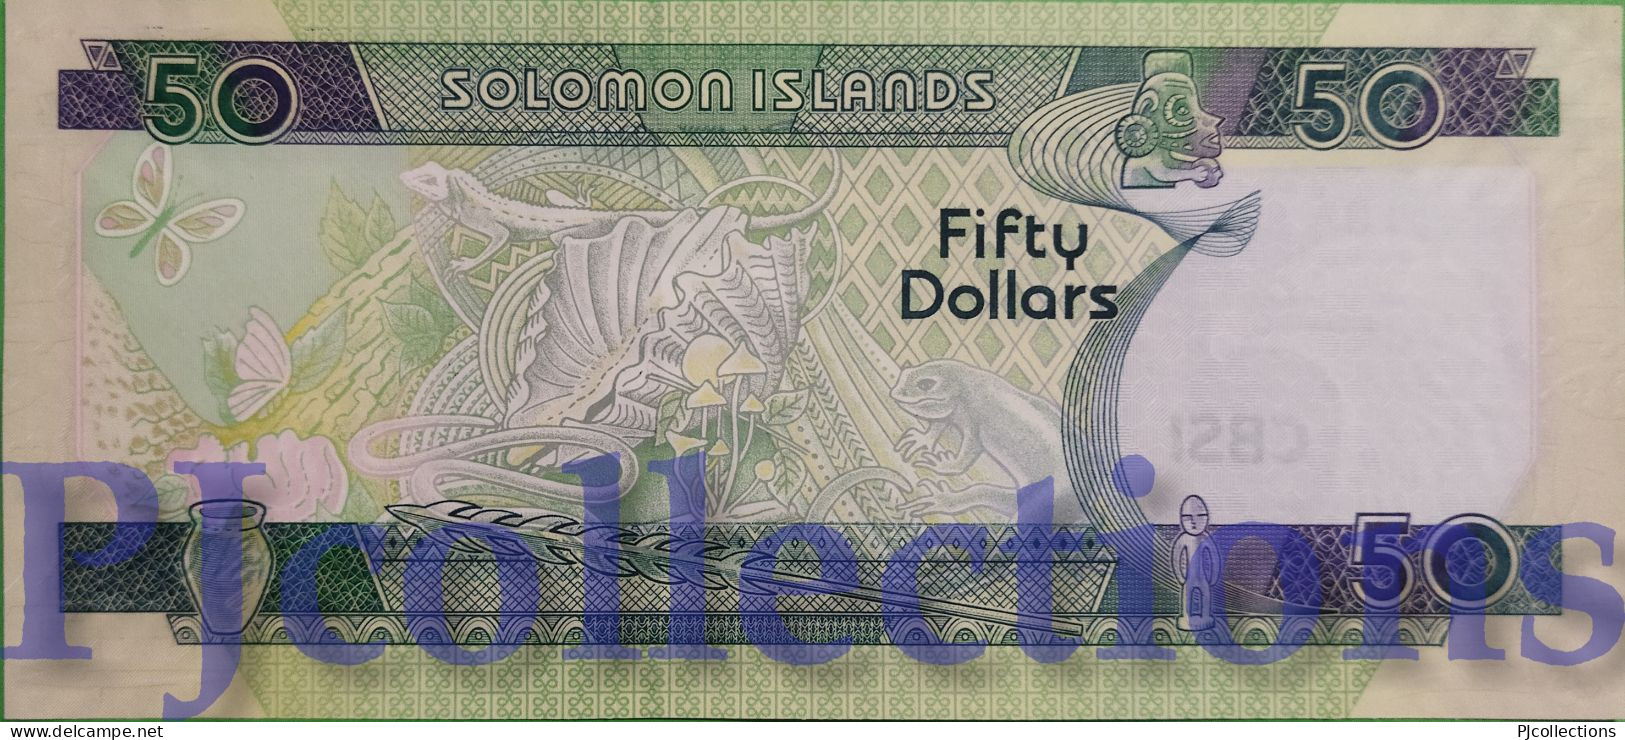 SOLOMON ISLANDS 50 DOLLARS 2004 PICK 29 UNC LOW SERIAL NUMBER "A/1 001038" - Salomons